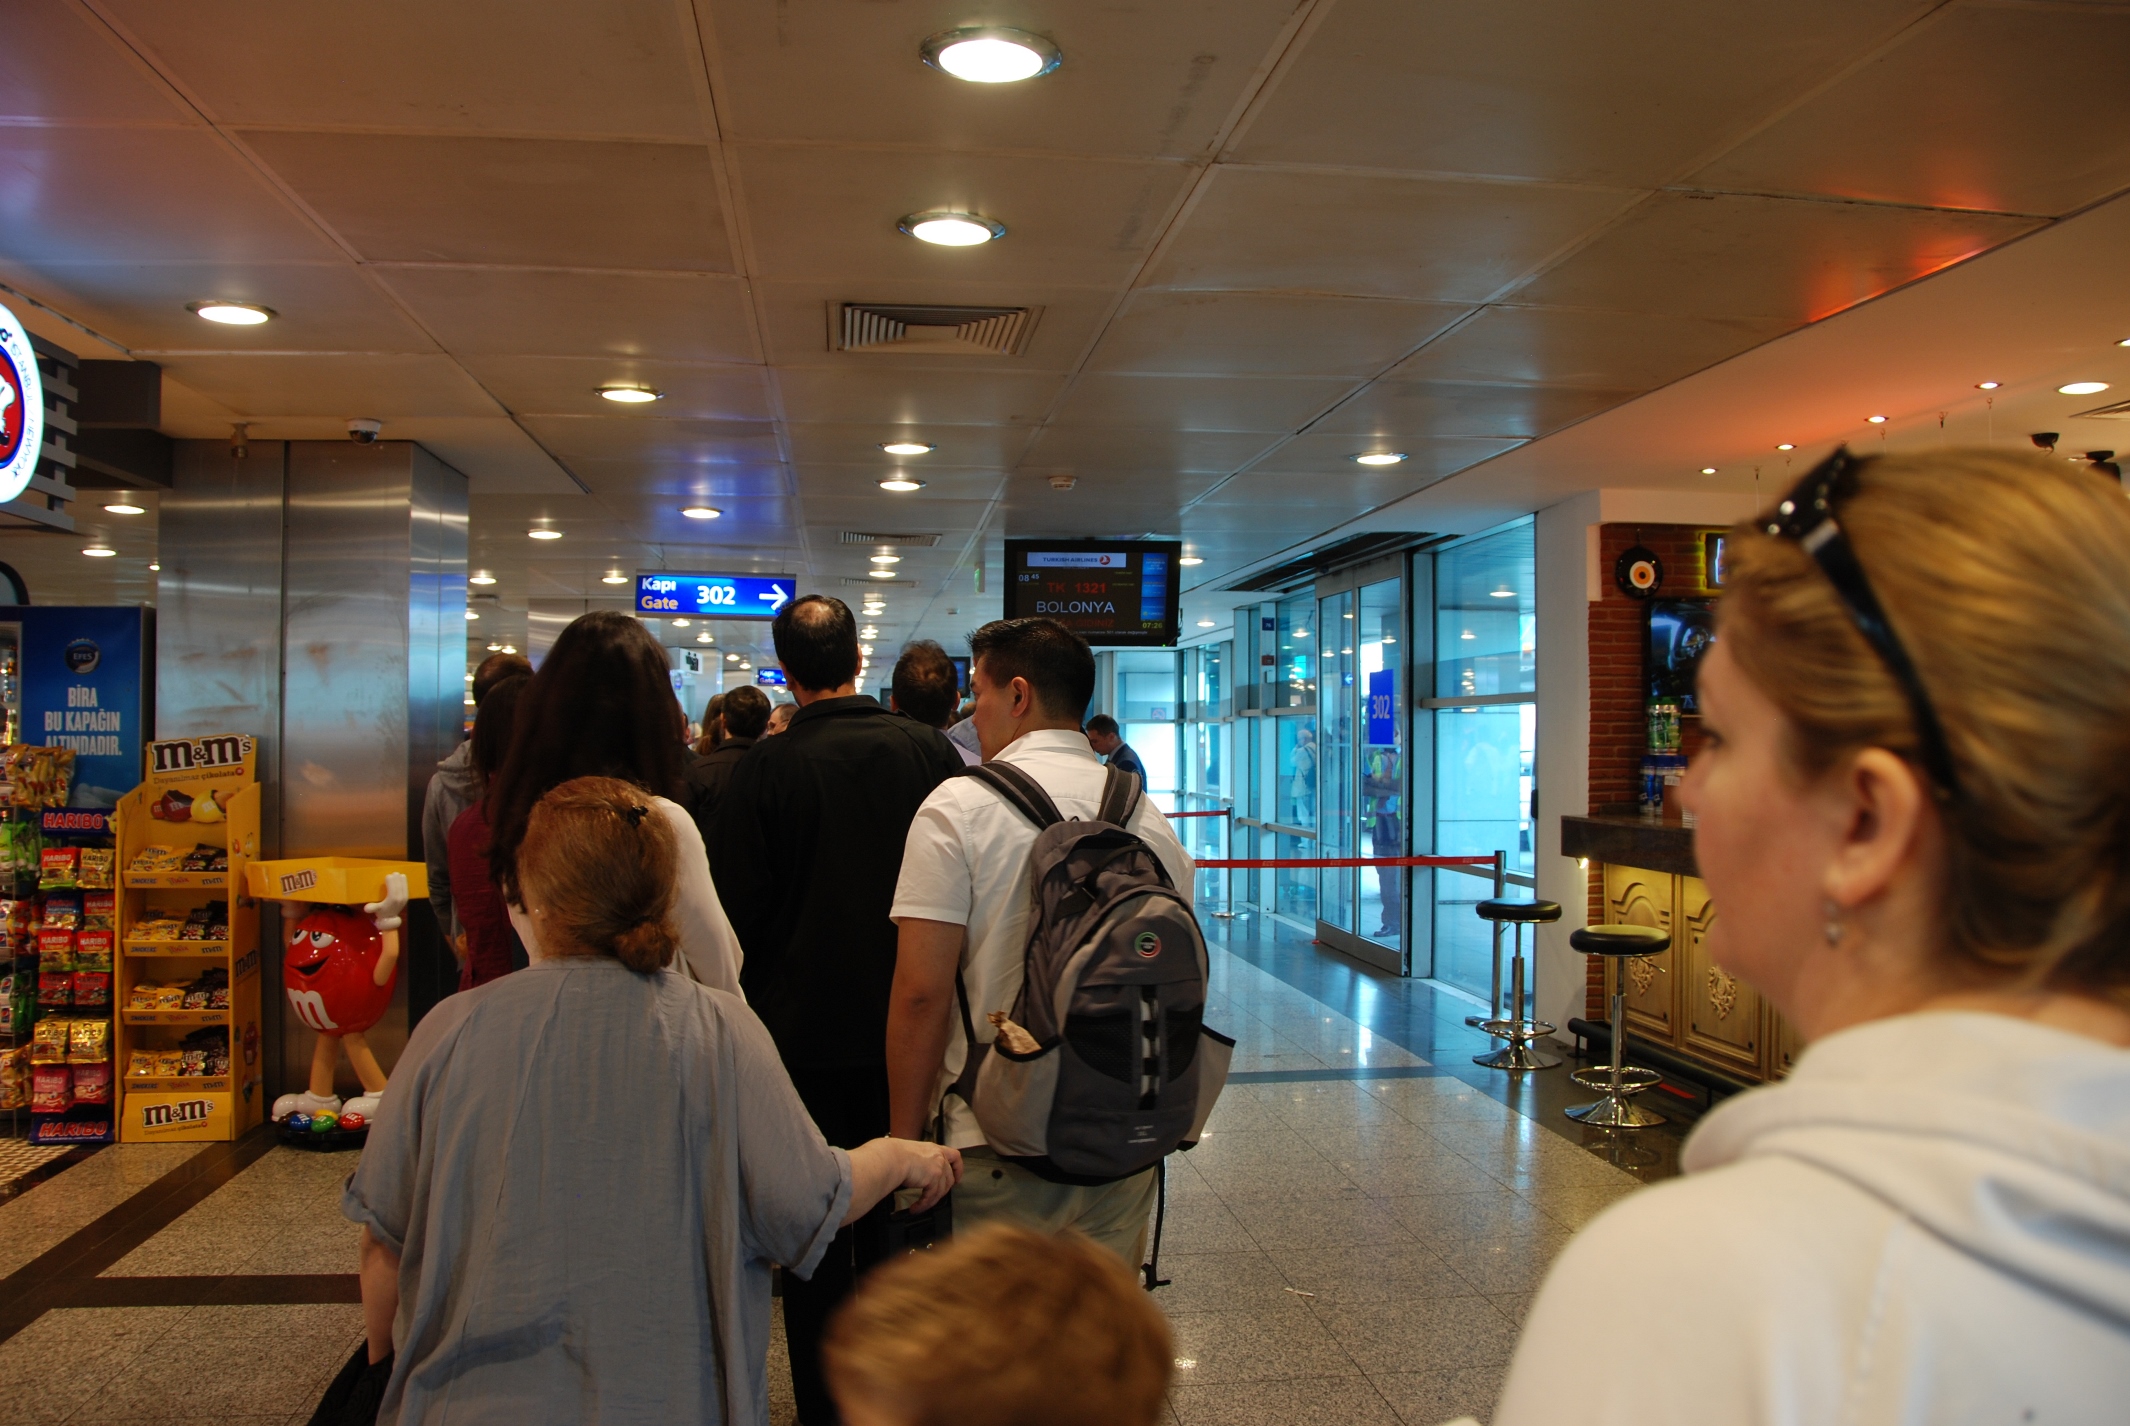 Istanbul_IST_Ataturk Airport_Boarding_Gate 302